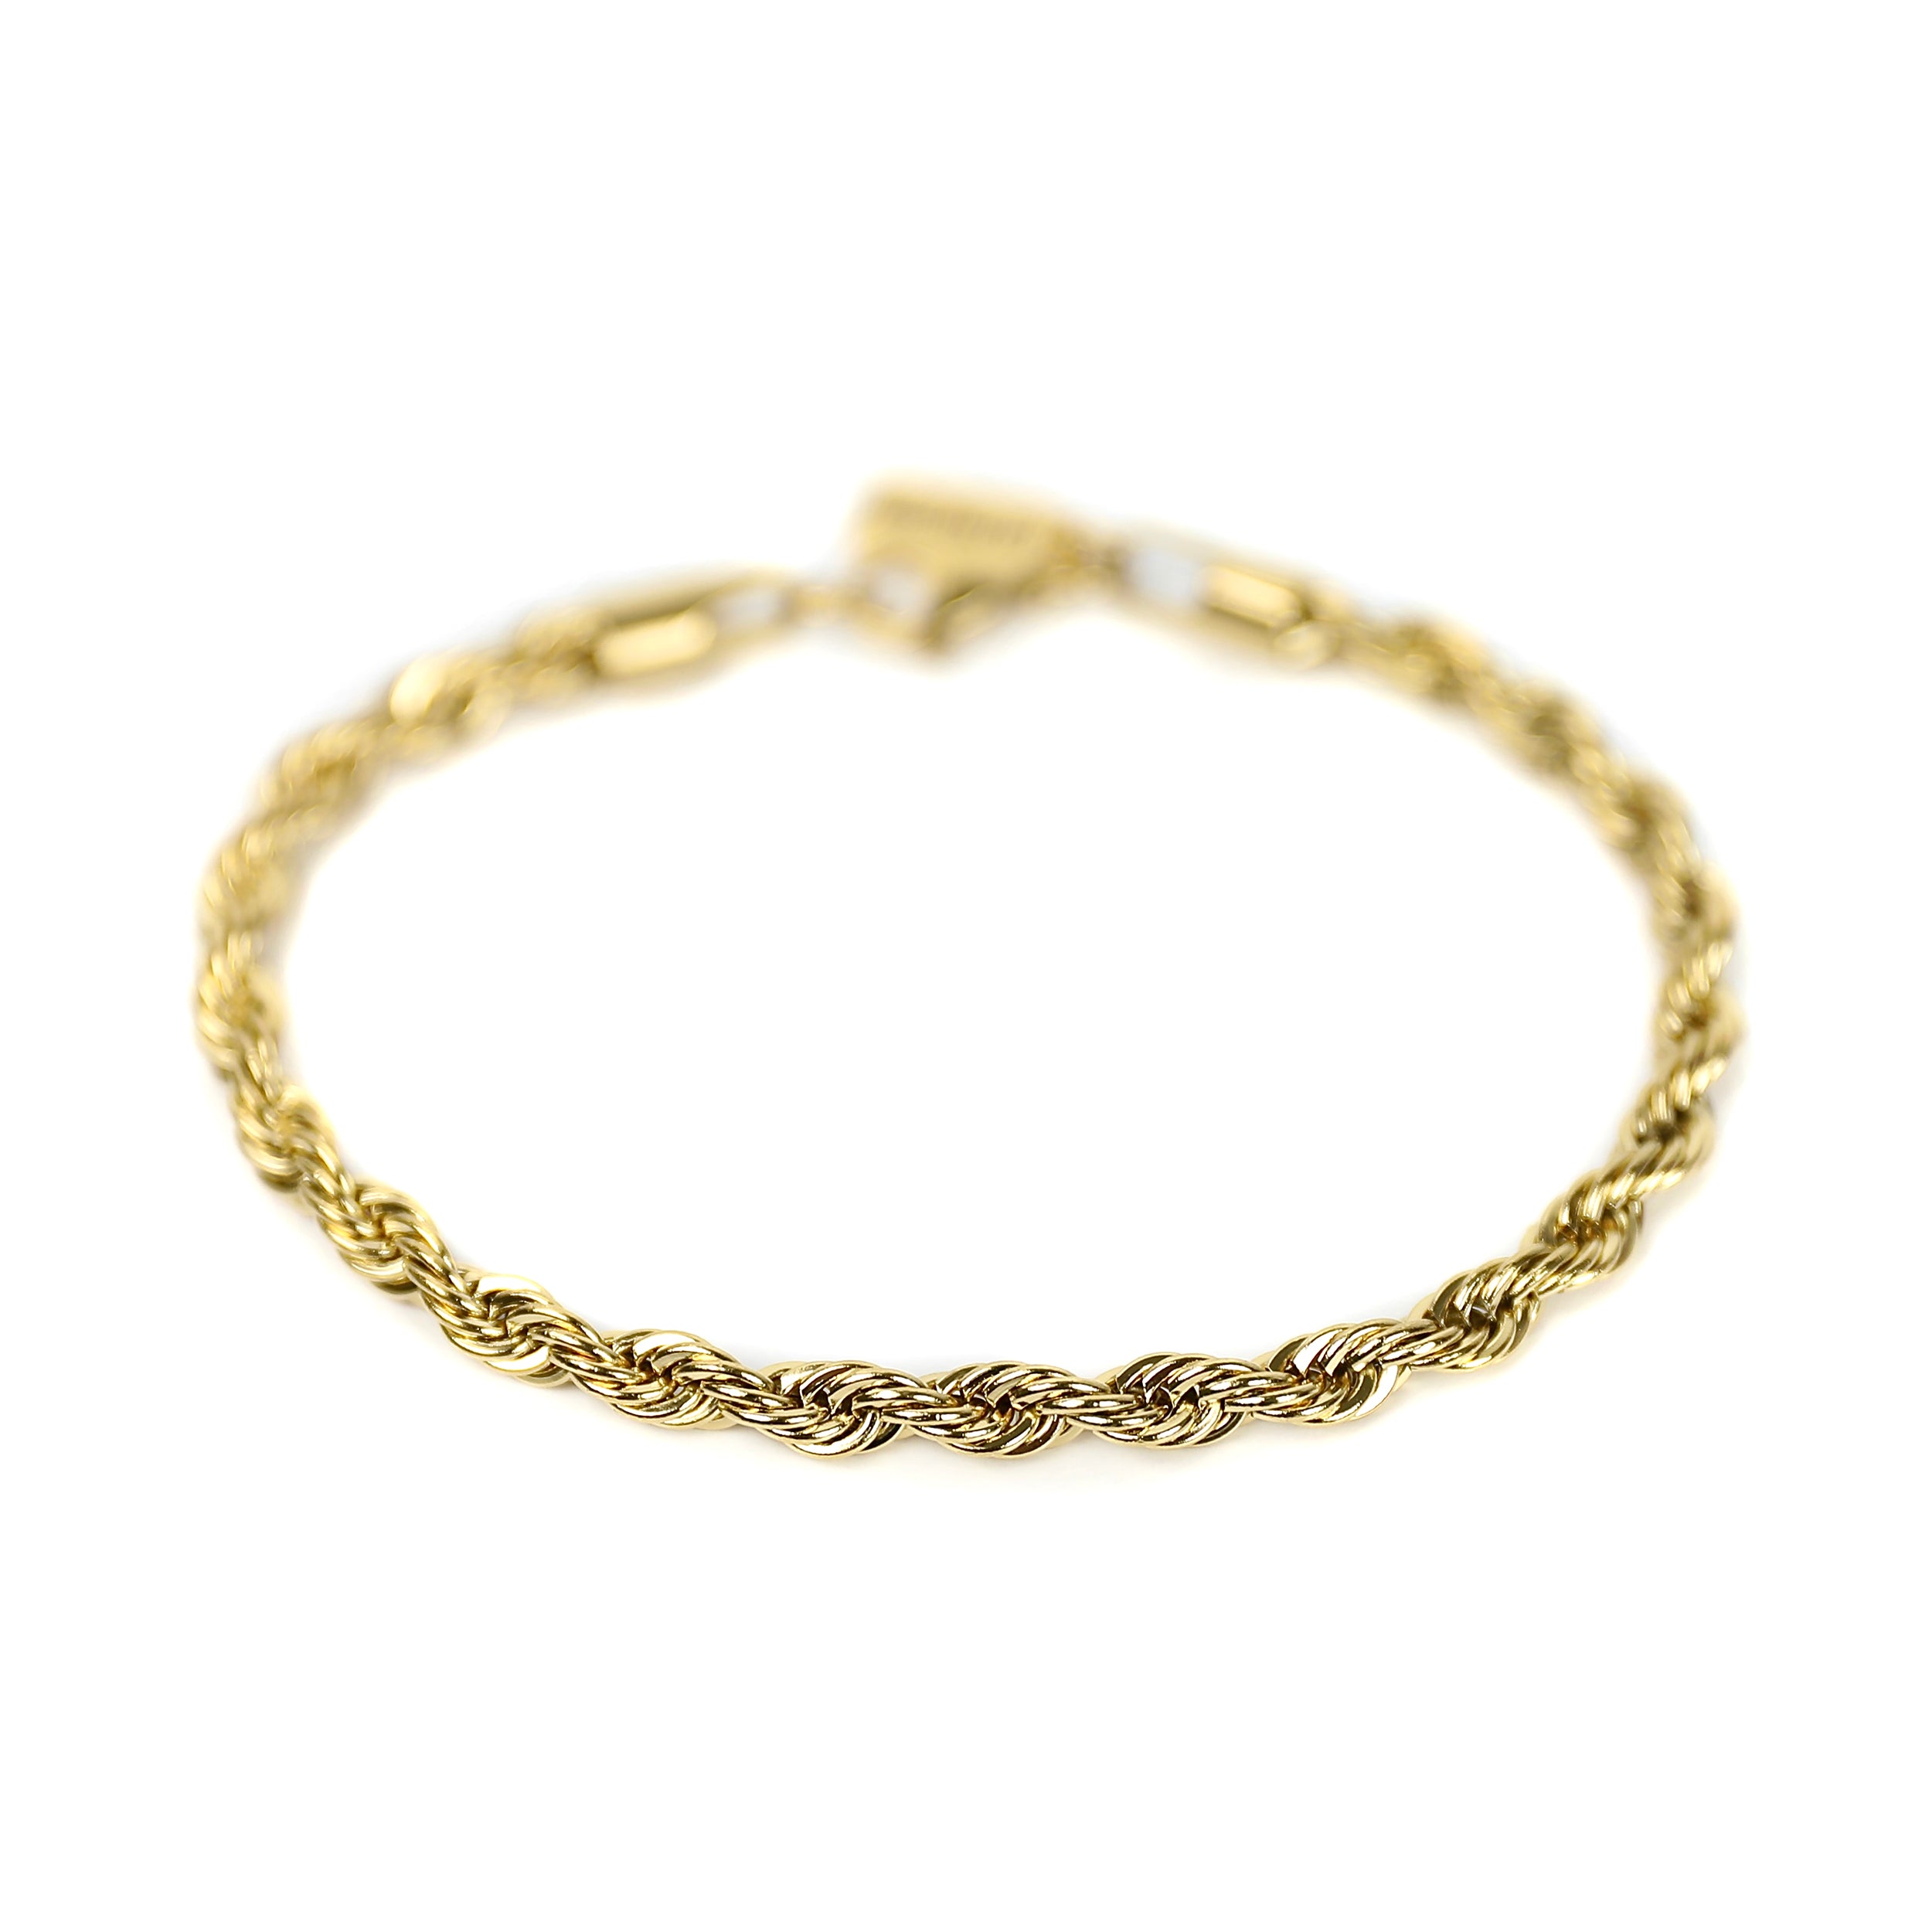 Rope Chain Bracelet - Gold 4.5mm